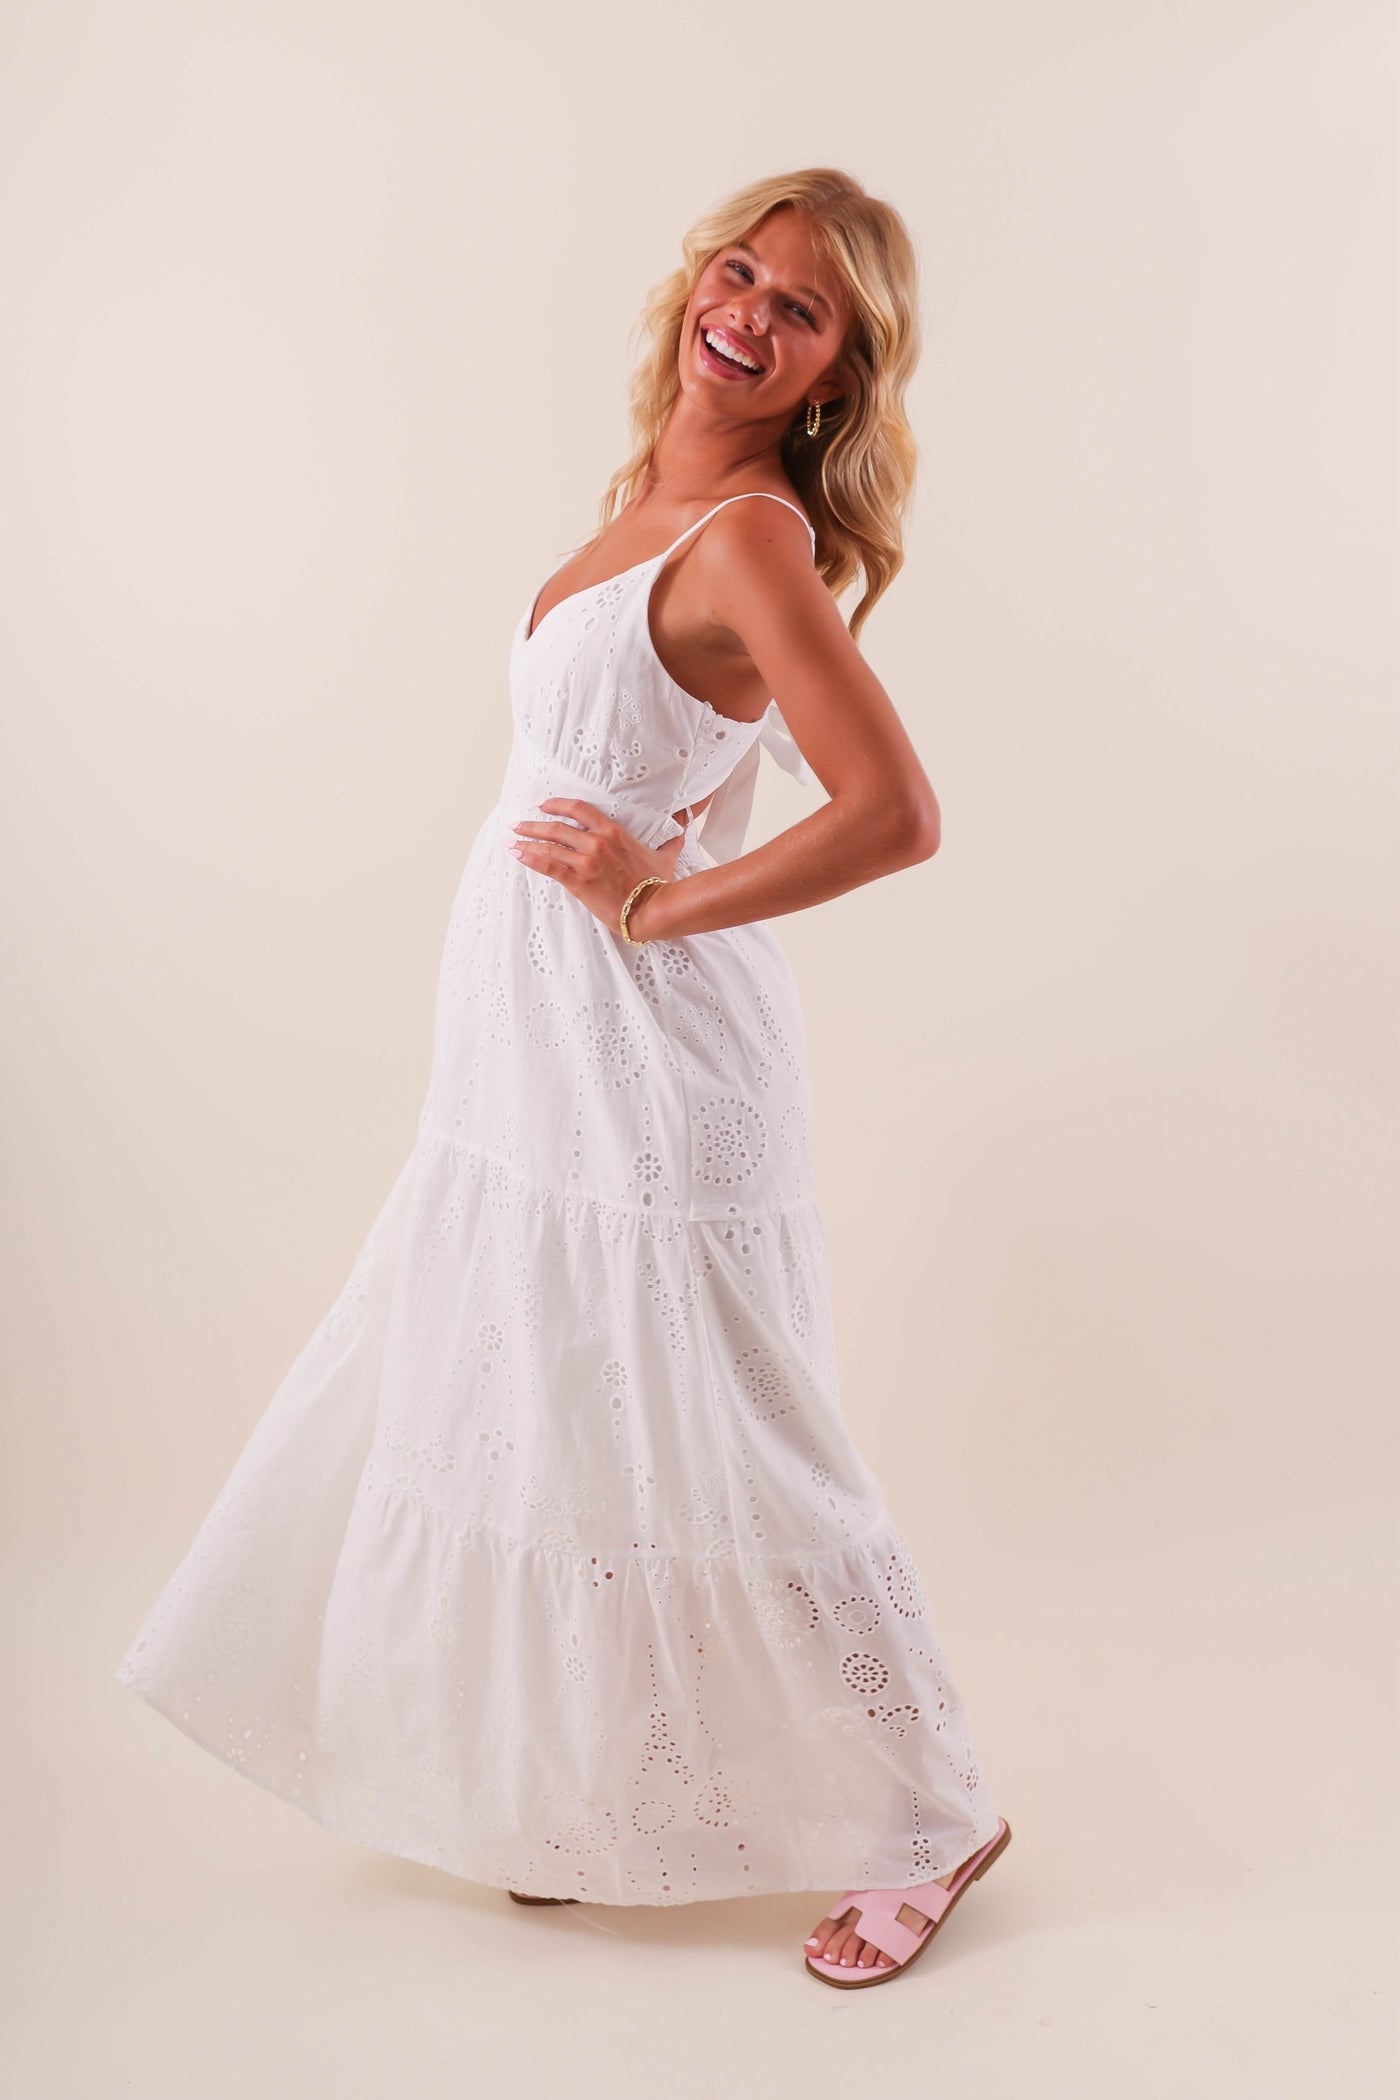 White Crotchet Maxi Dress- Women's White Summer Maxi- Iris Maxi Dress